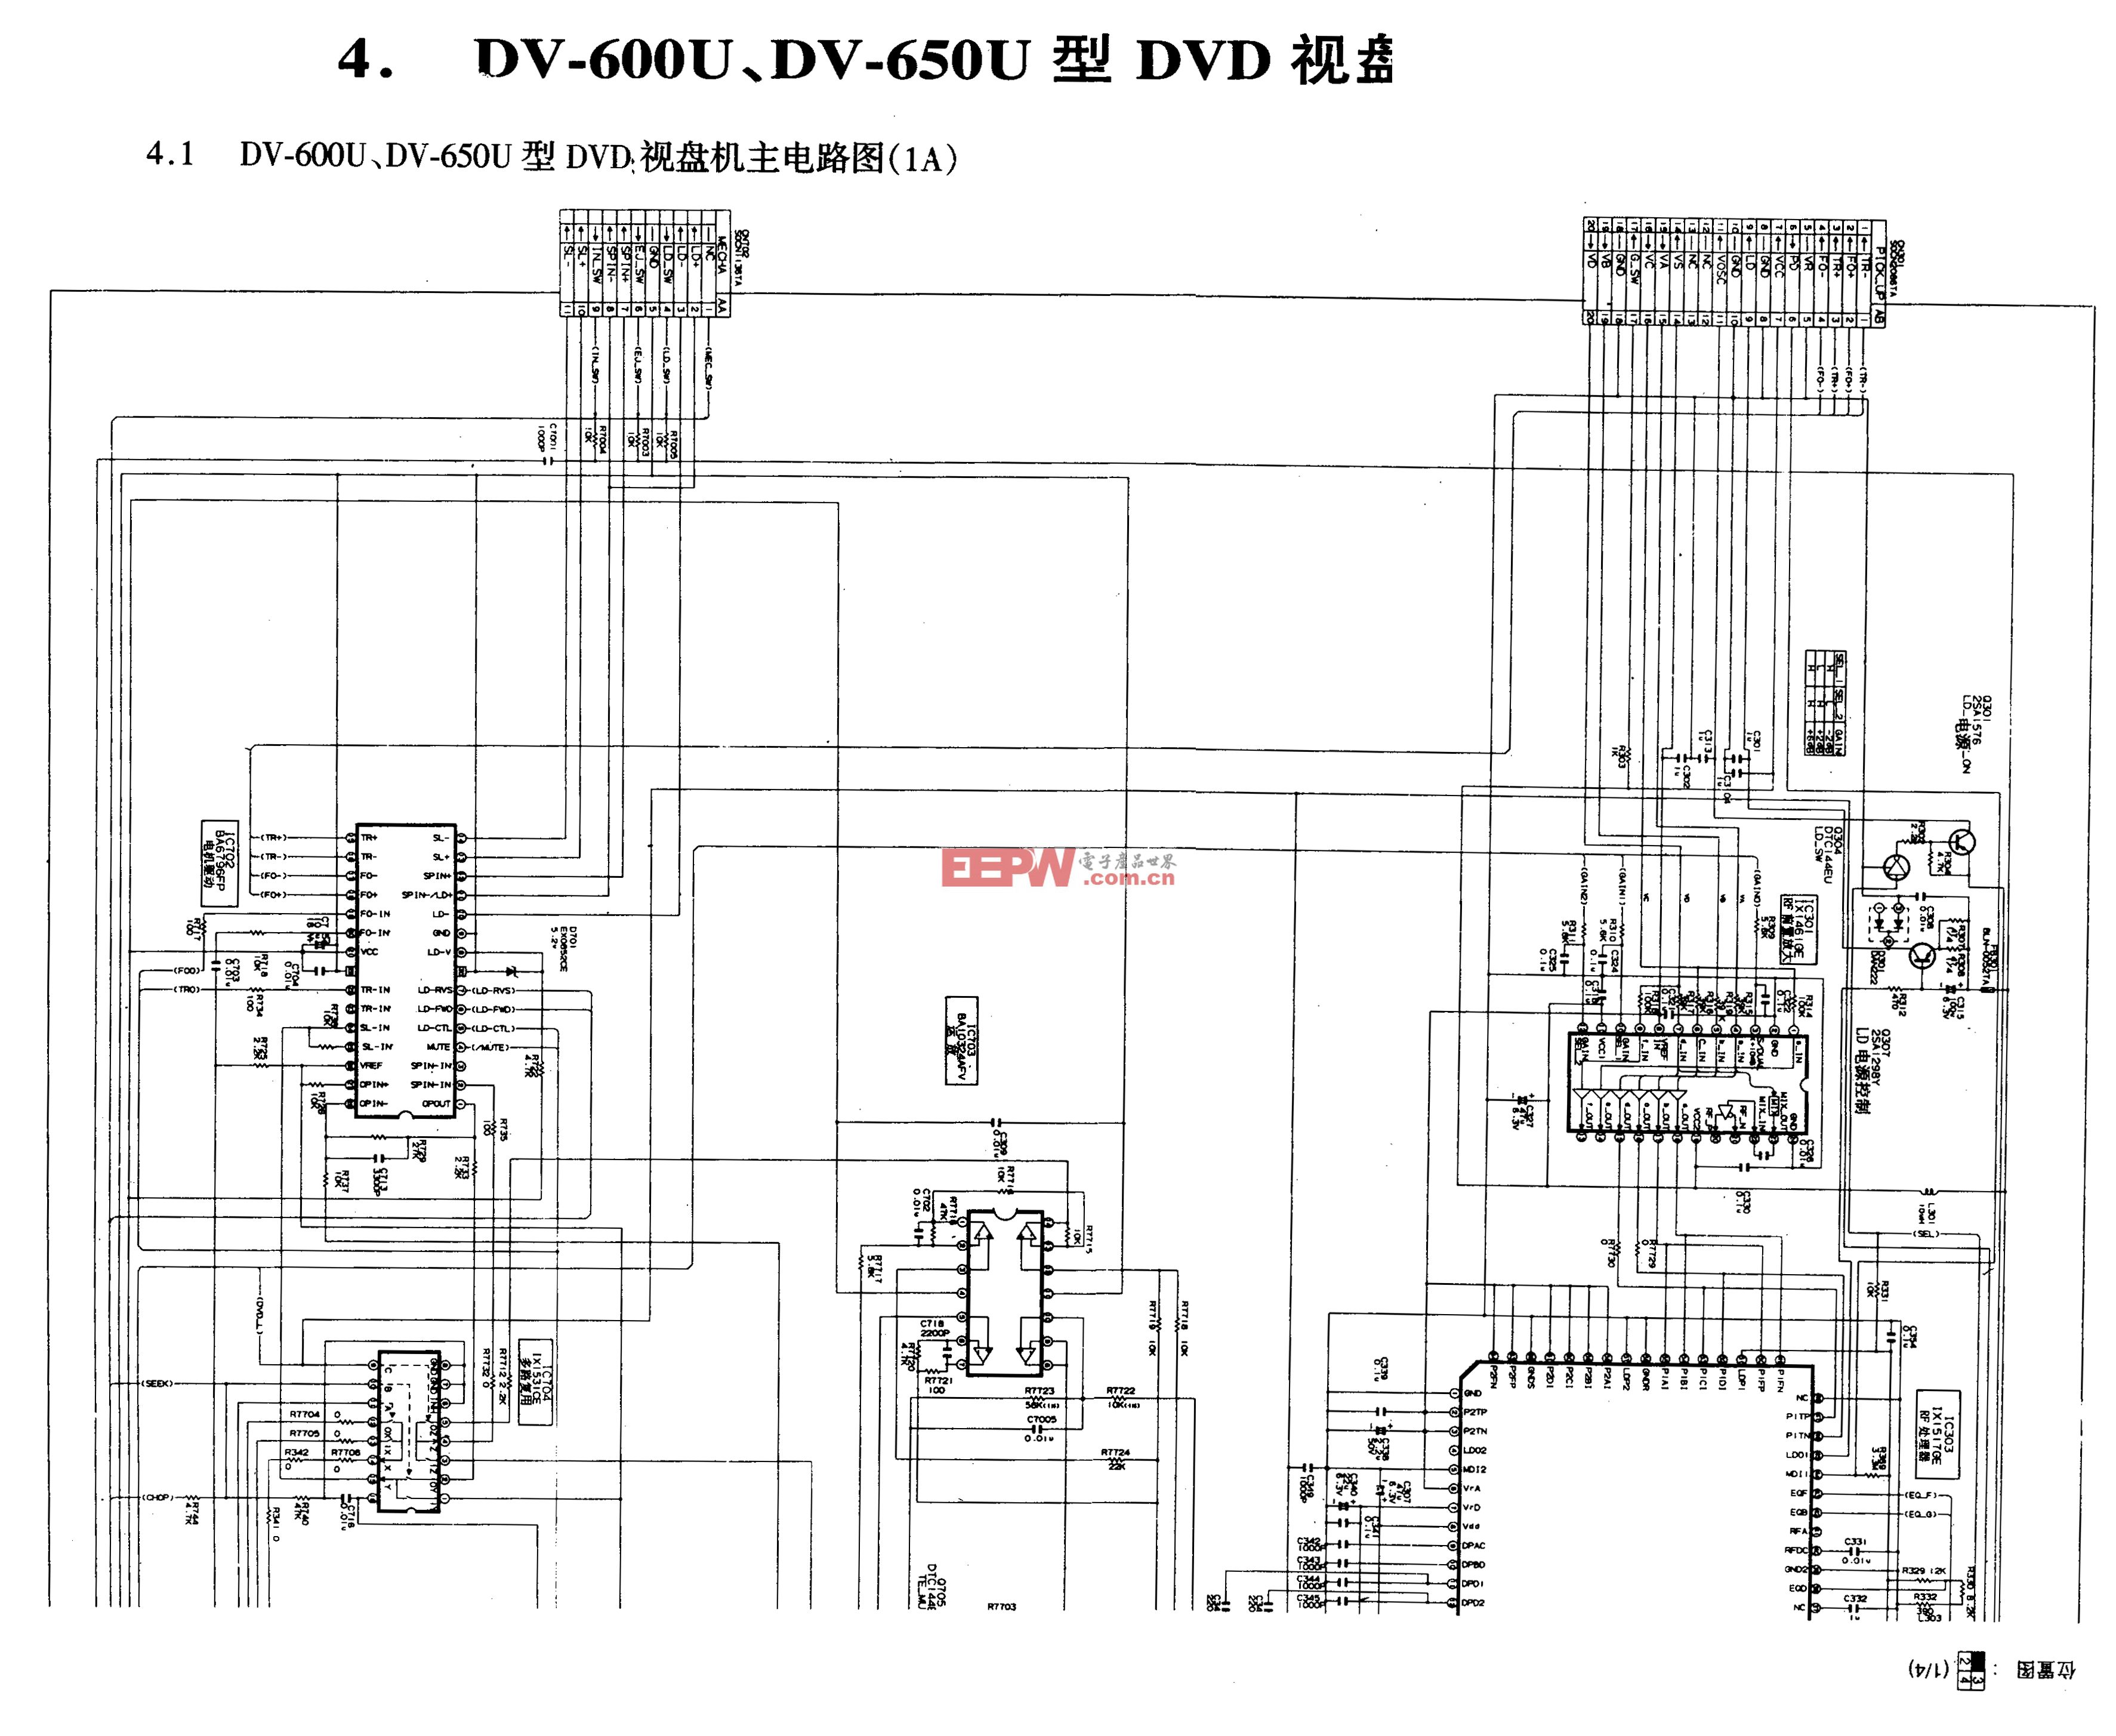 SHARP DV-600U、DV-650U型DVD-主电路图1A